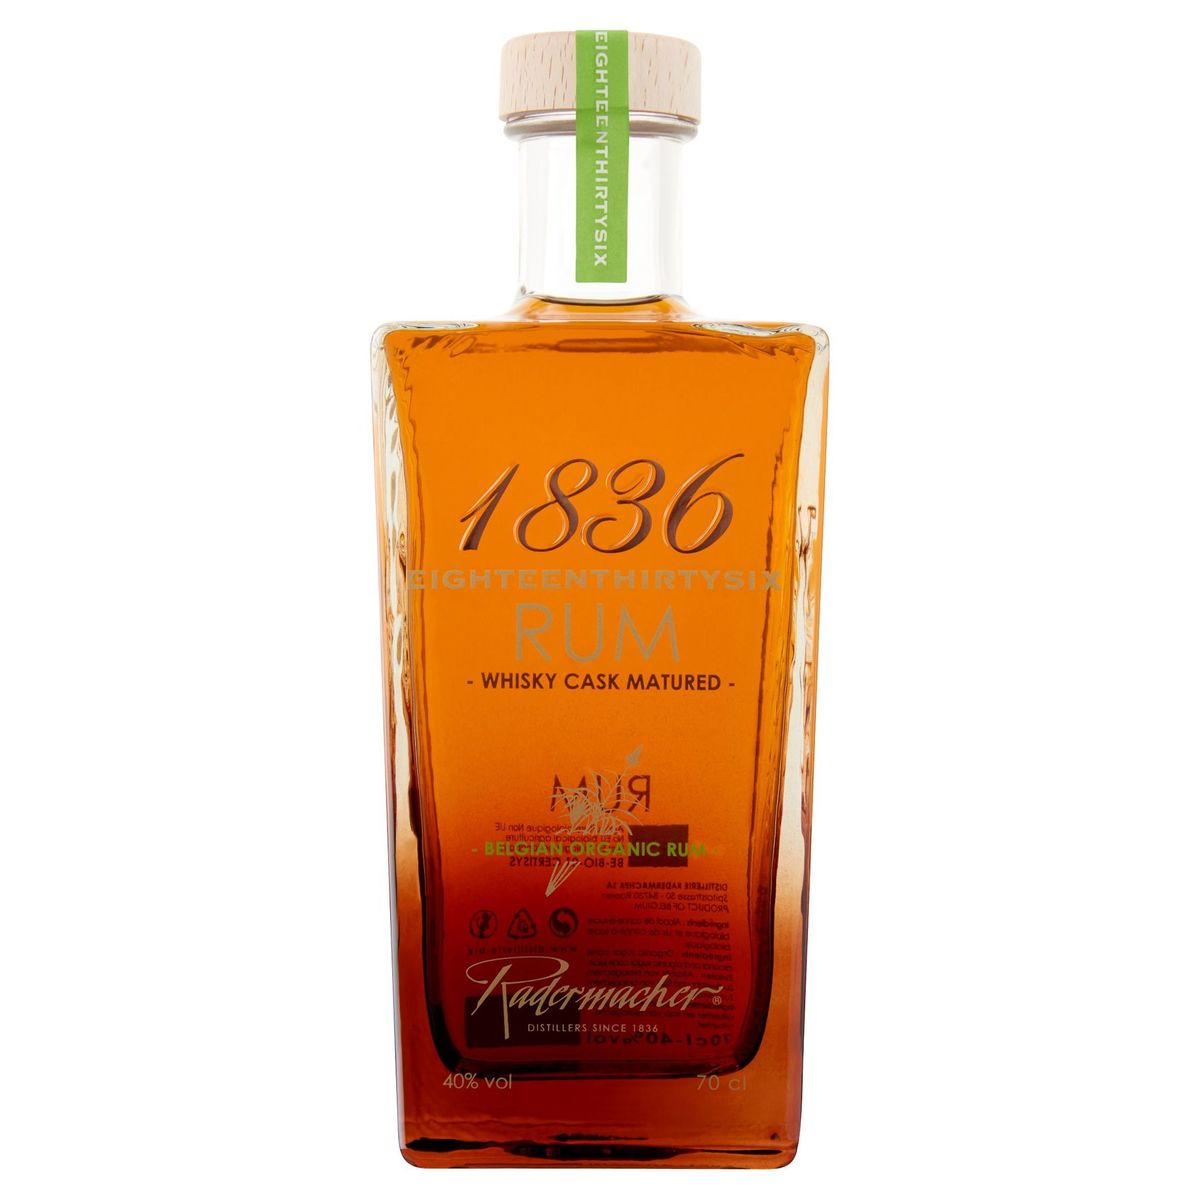 Radermacher 1836 Belgian Organic Rum 70 cl